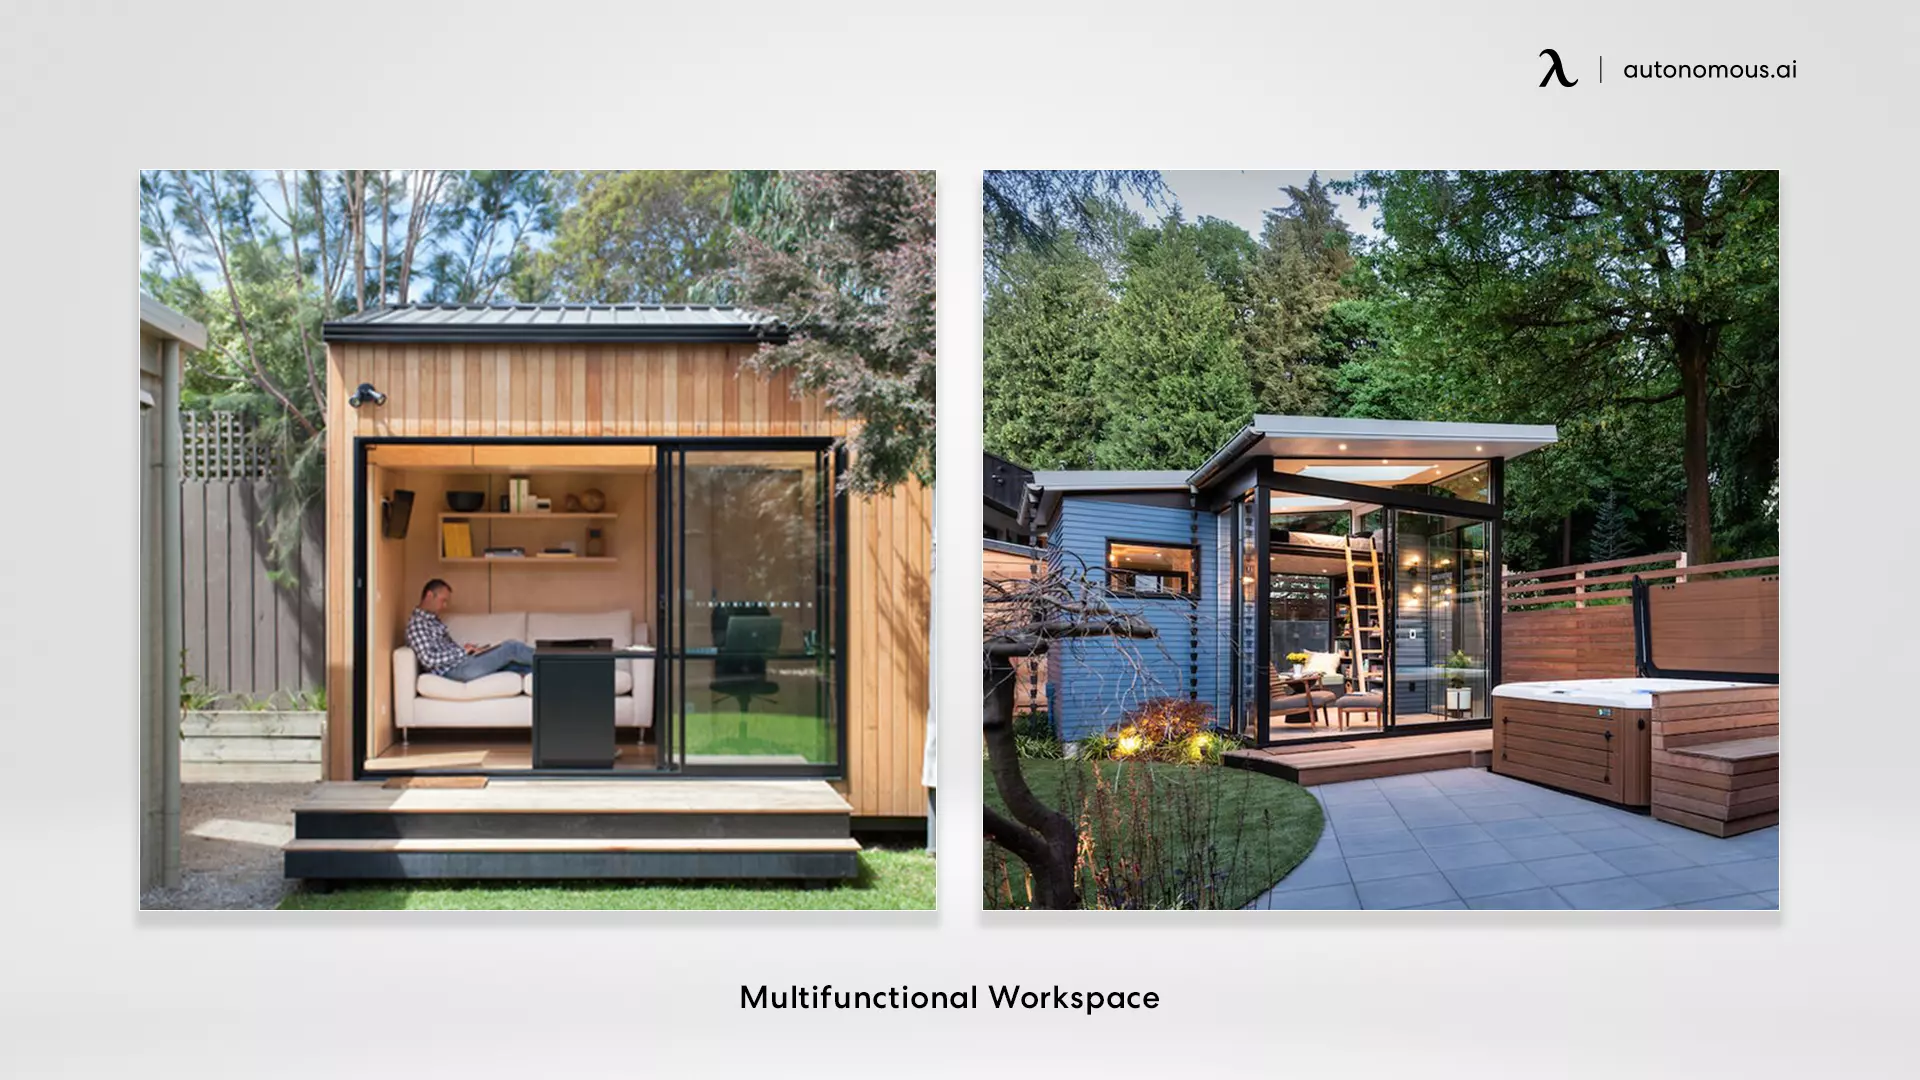 Multifunctional Workspace garden office ideas